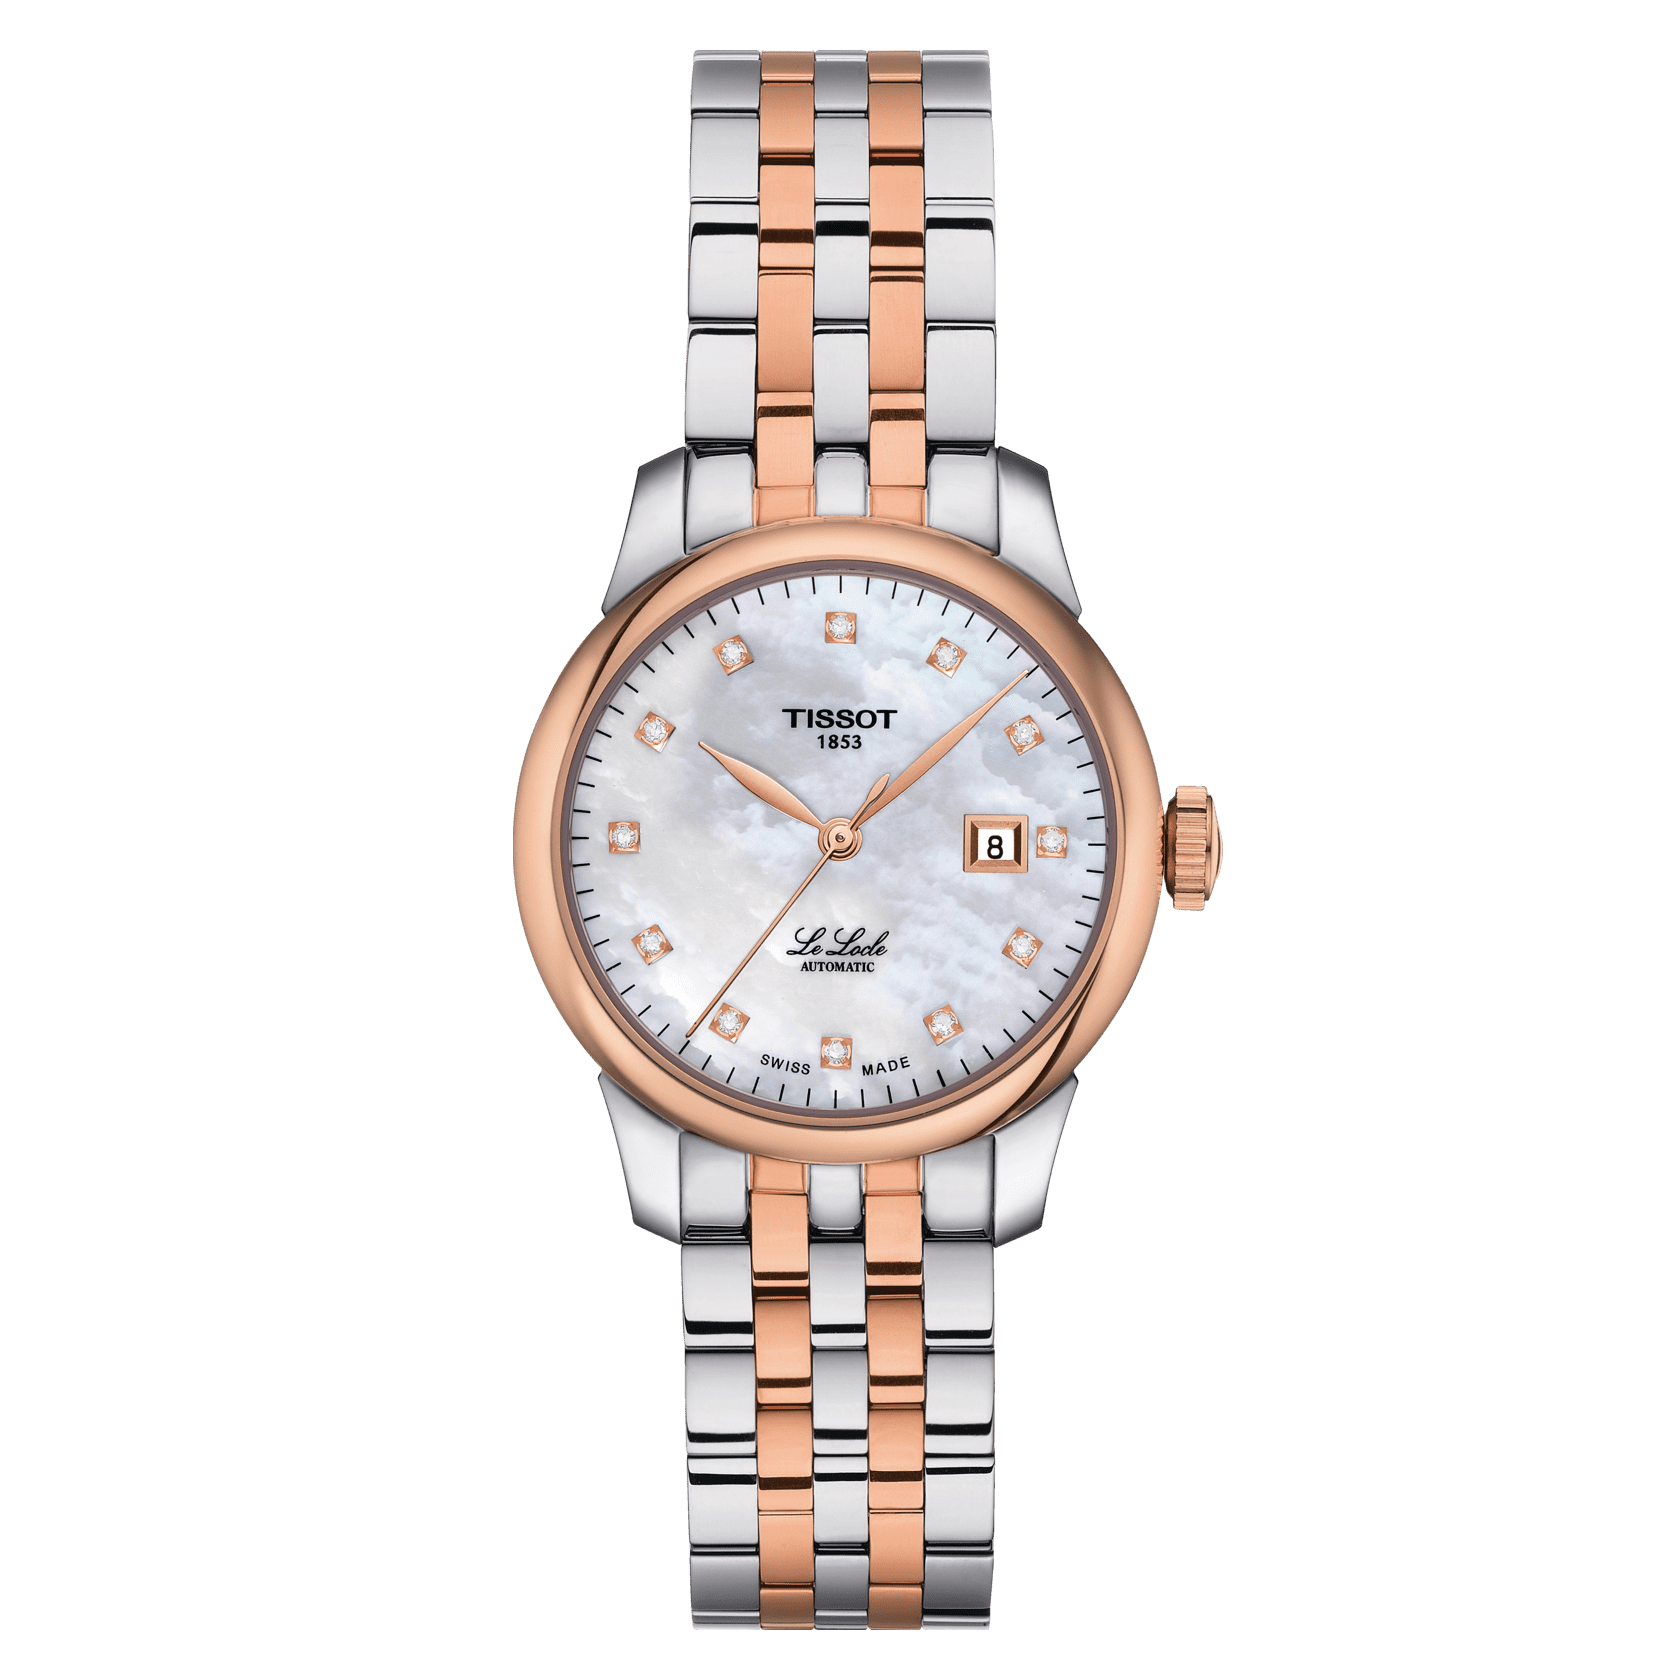 Copy Baume Mercier Watch